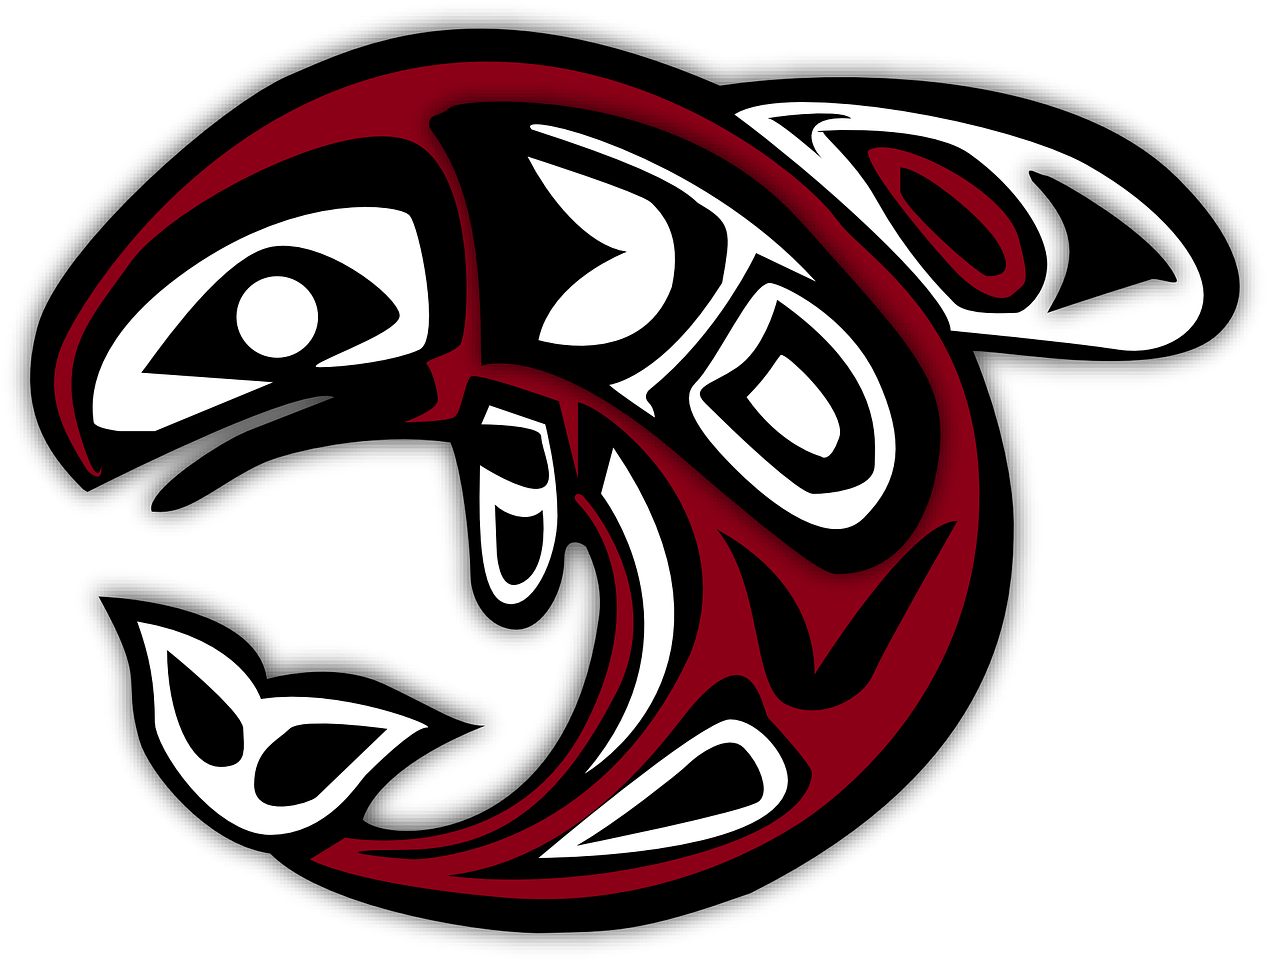 The Coming Of The Salmon - Native American Salmon Symbol (1280x974)